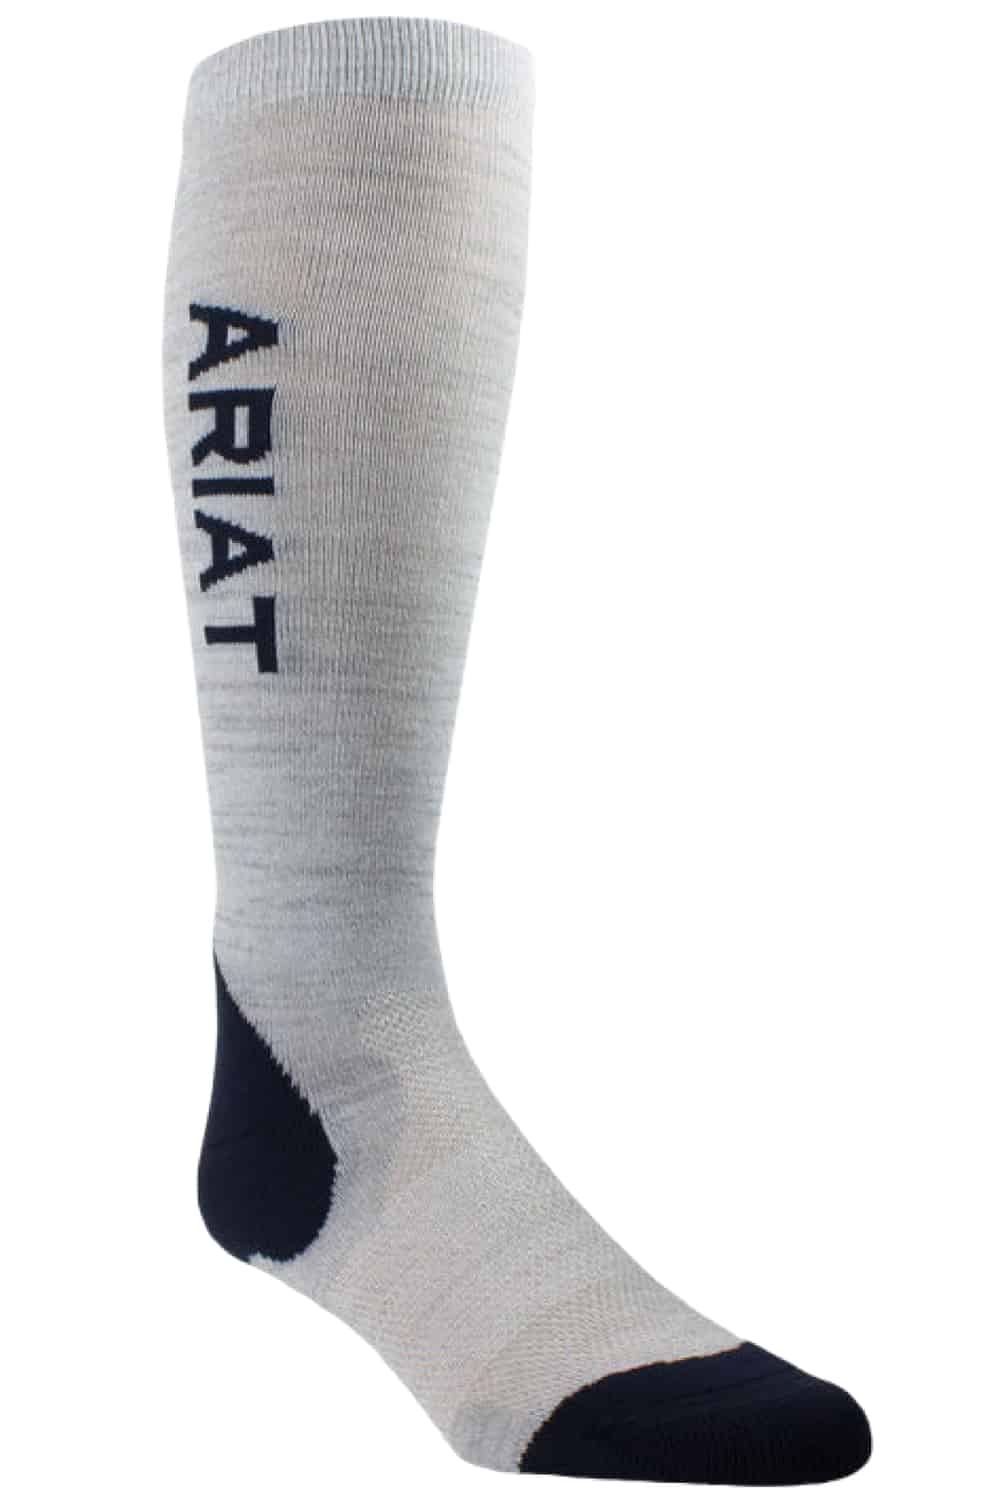 AriatTEK Performance Socks in Heather Grey/Navy 